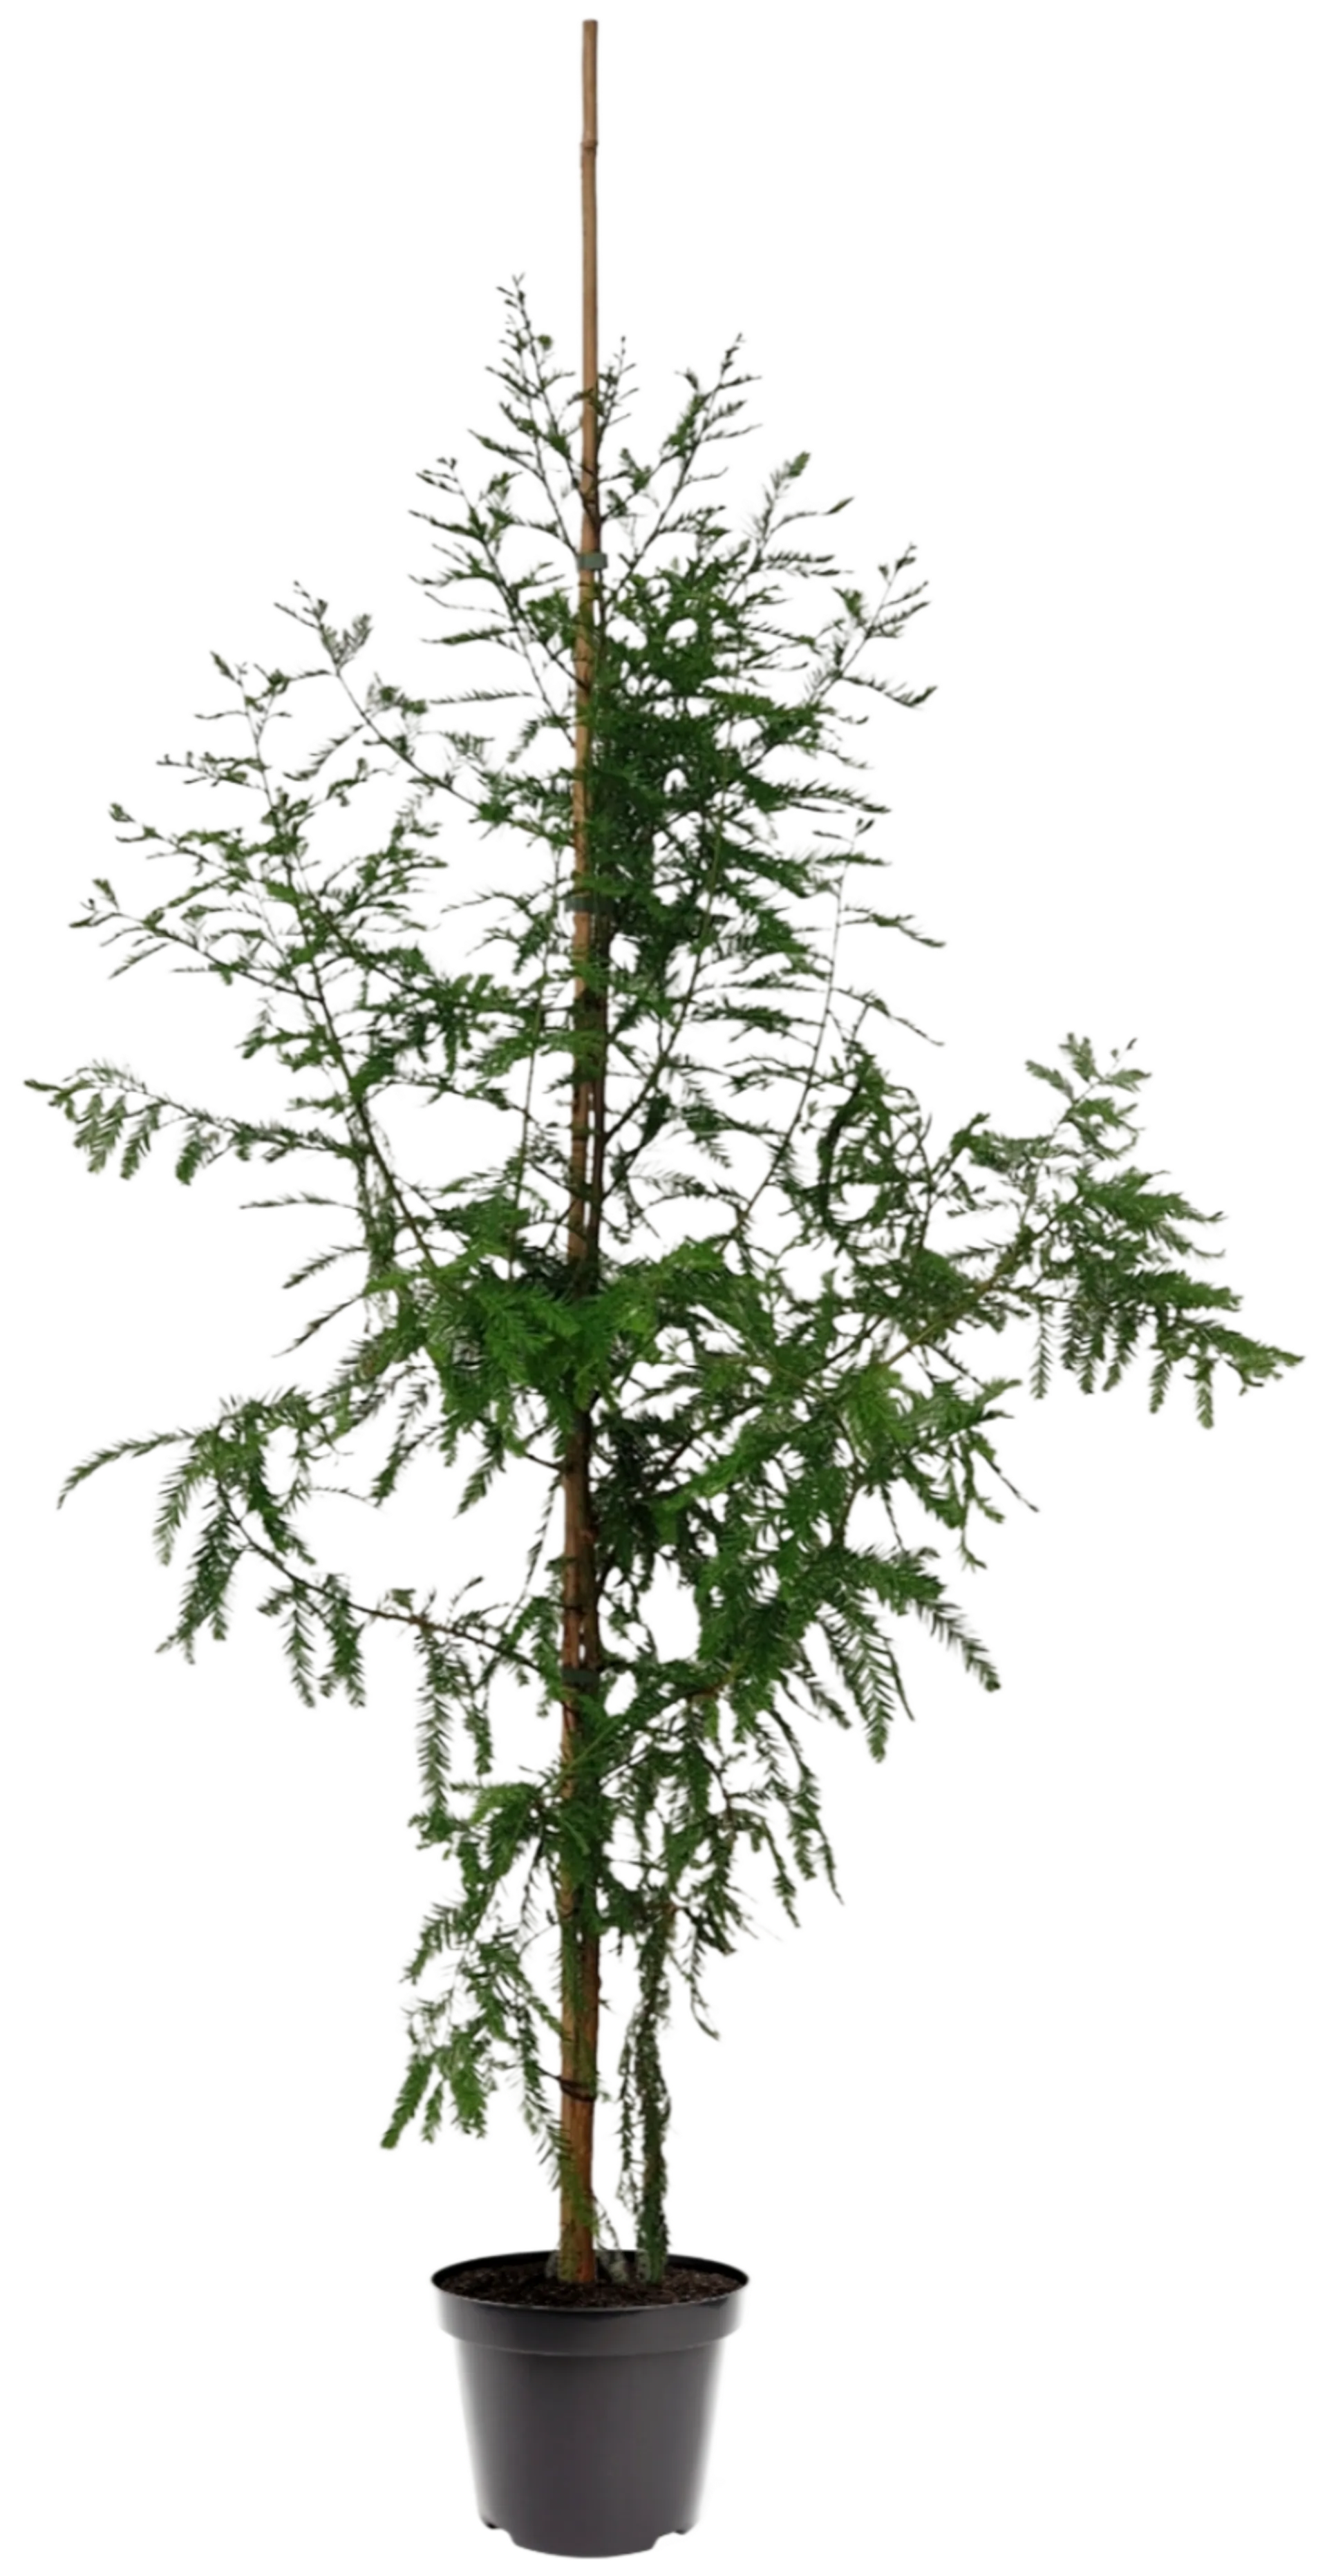 Floridan suosypressi 125-150 cm astiataimi 7,5 l ruukku Taxodium distichum